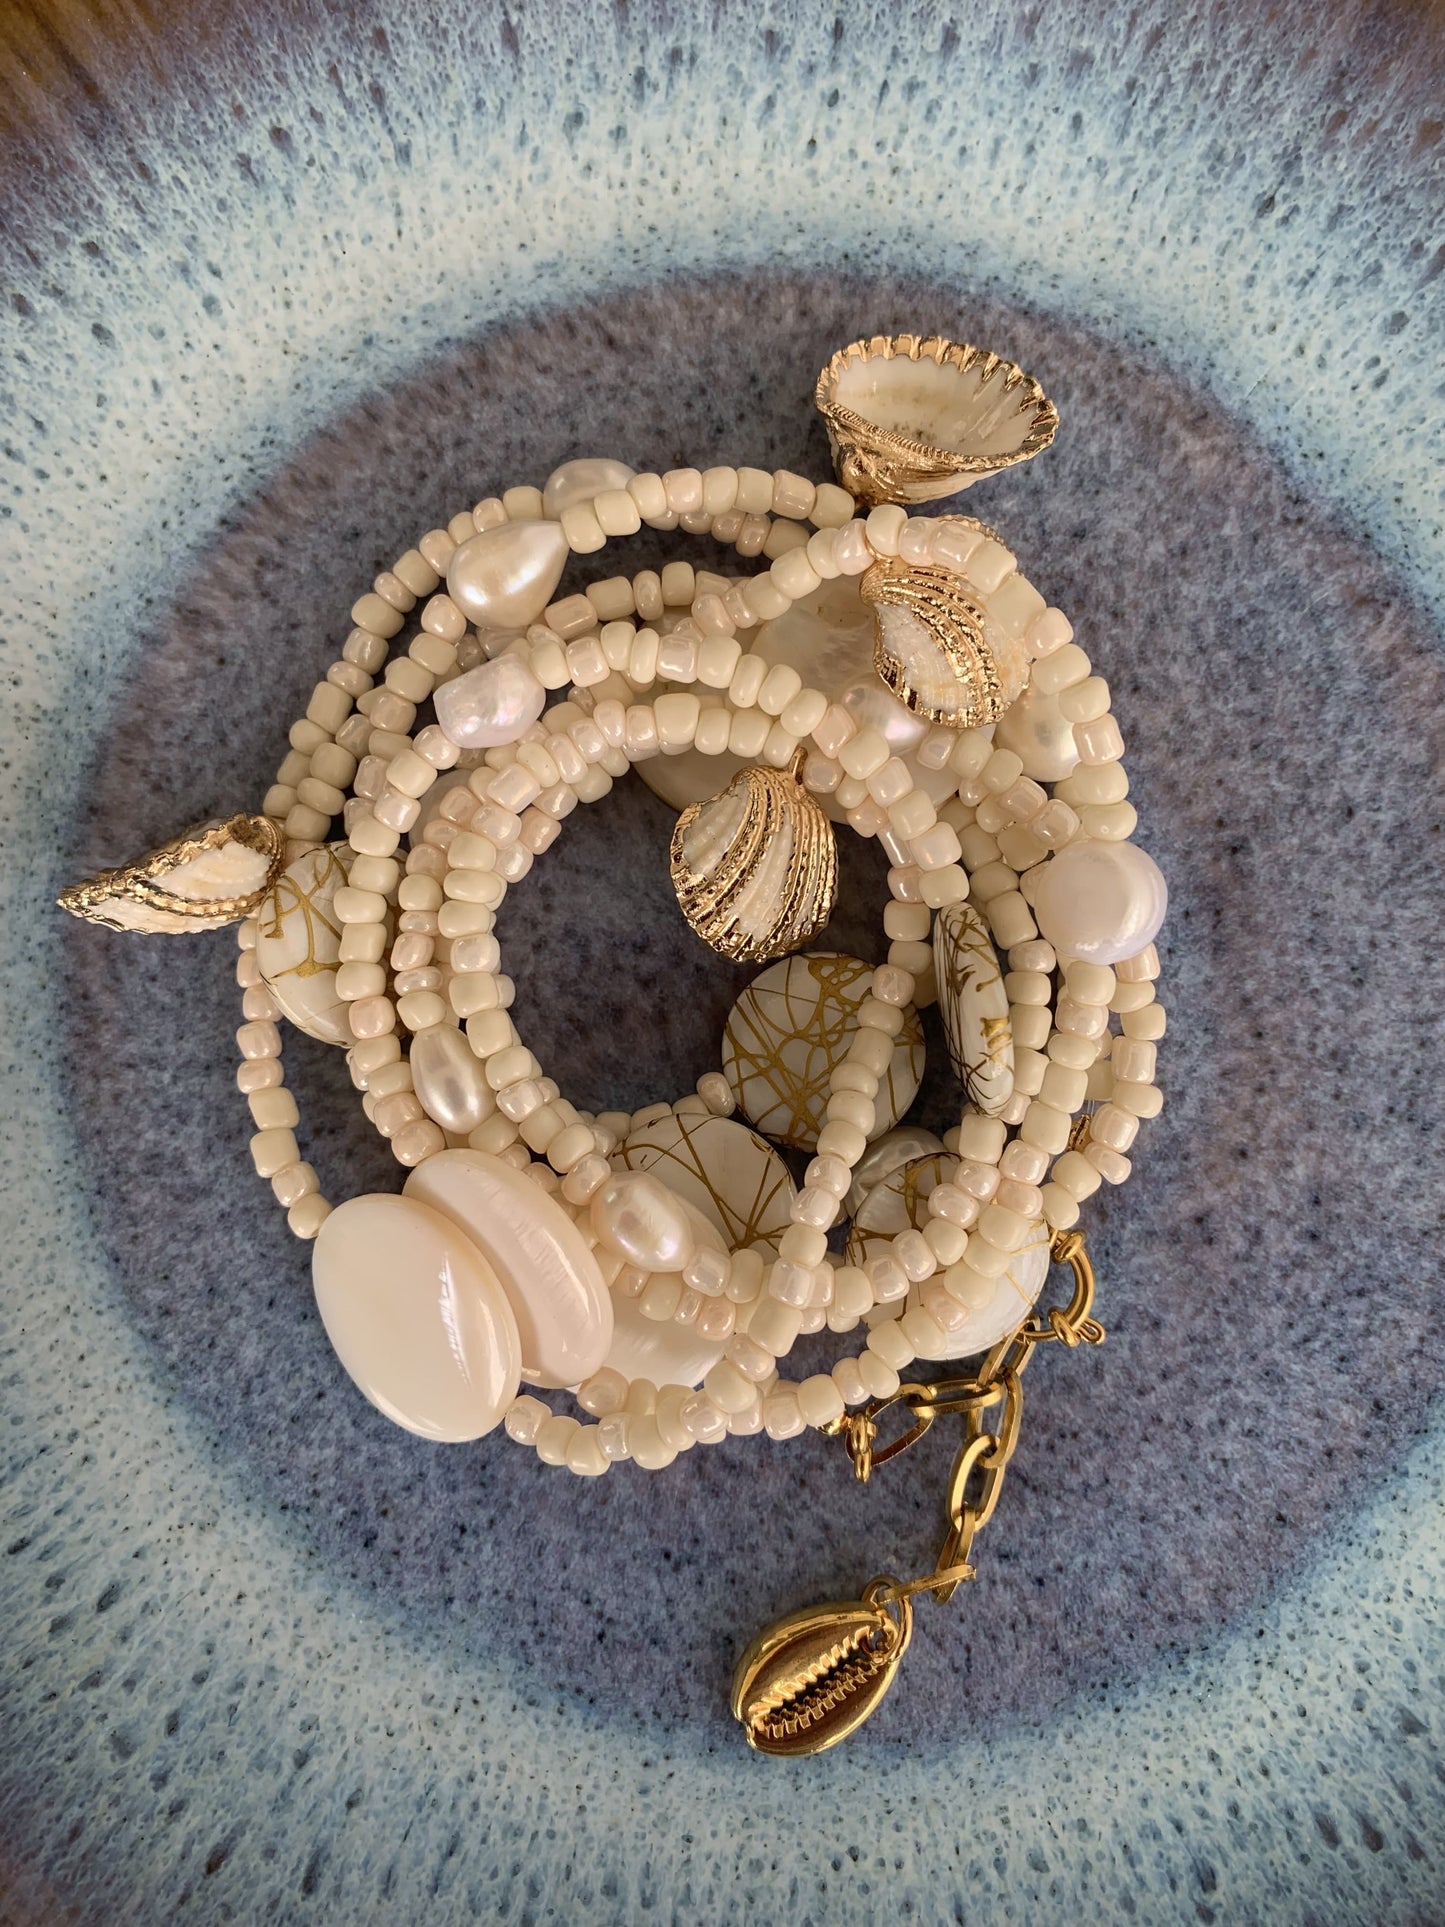 Mermaid wrap bracelet with shells